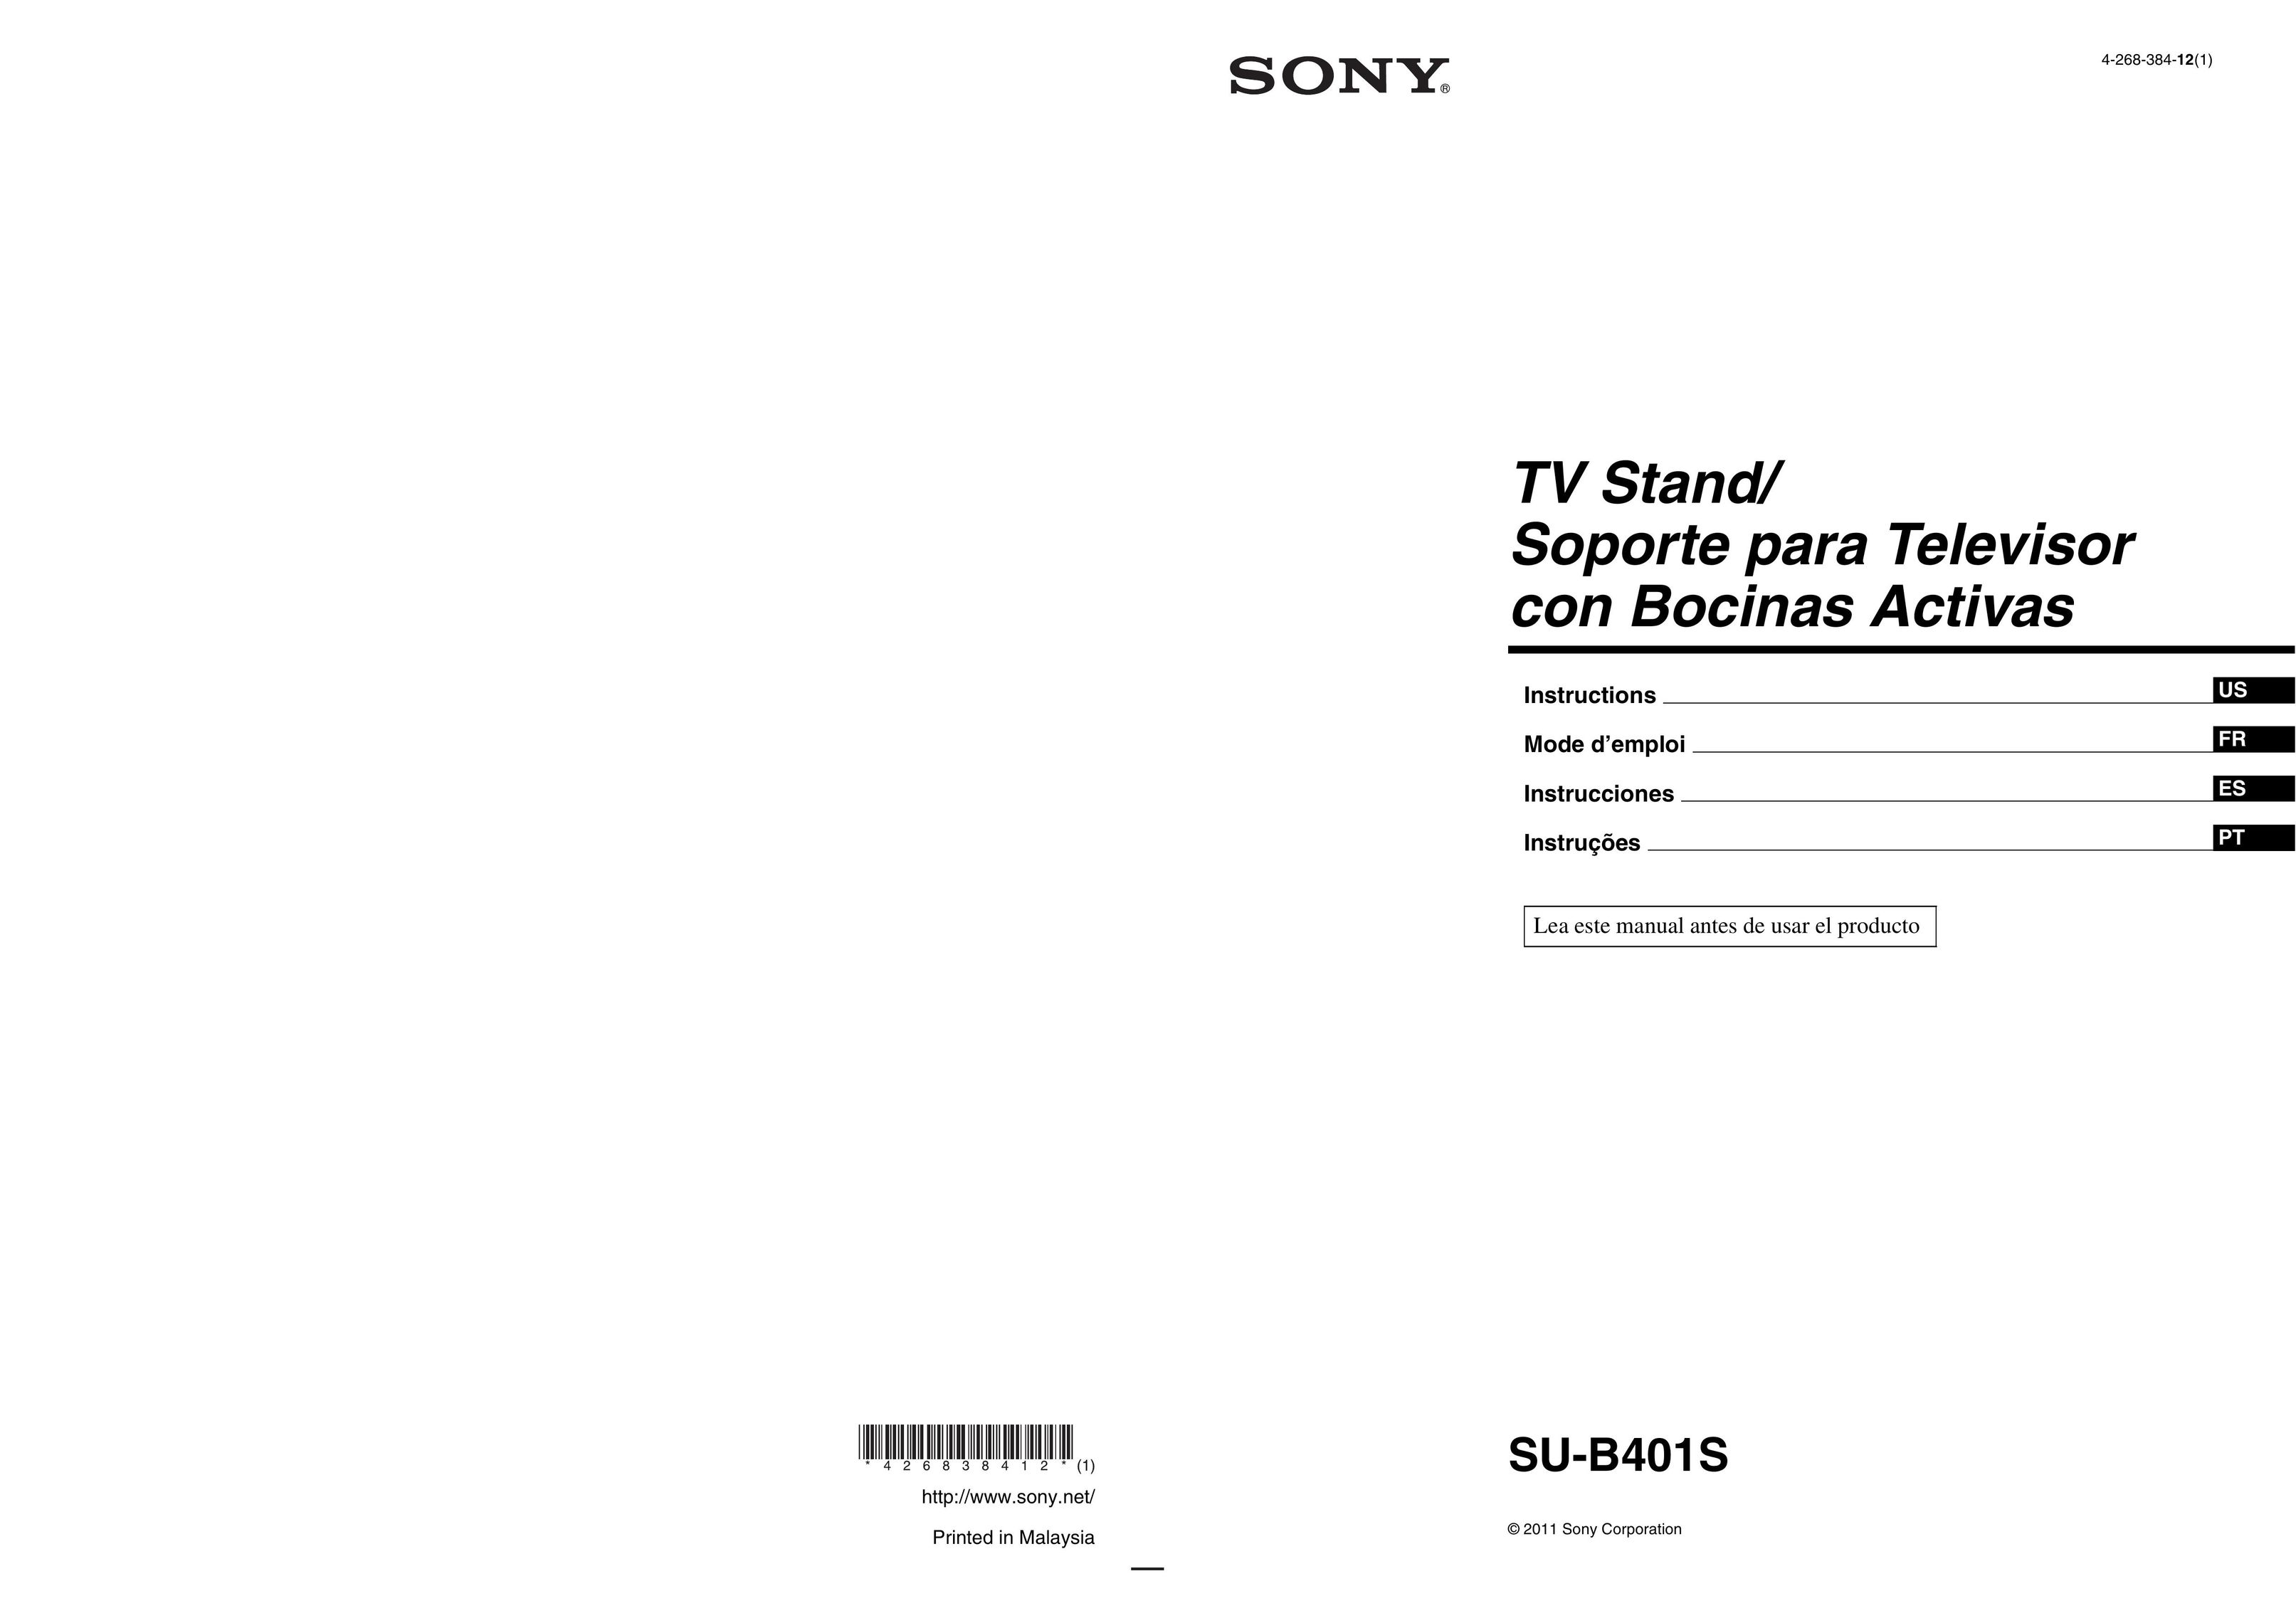 Sony SU-B401S TV Video Accessories User Manual